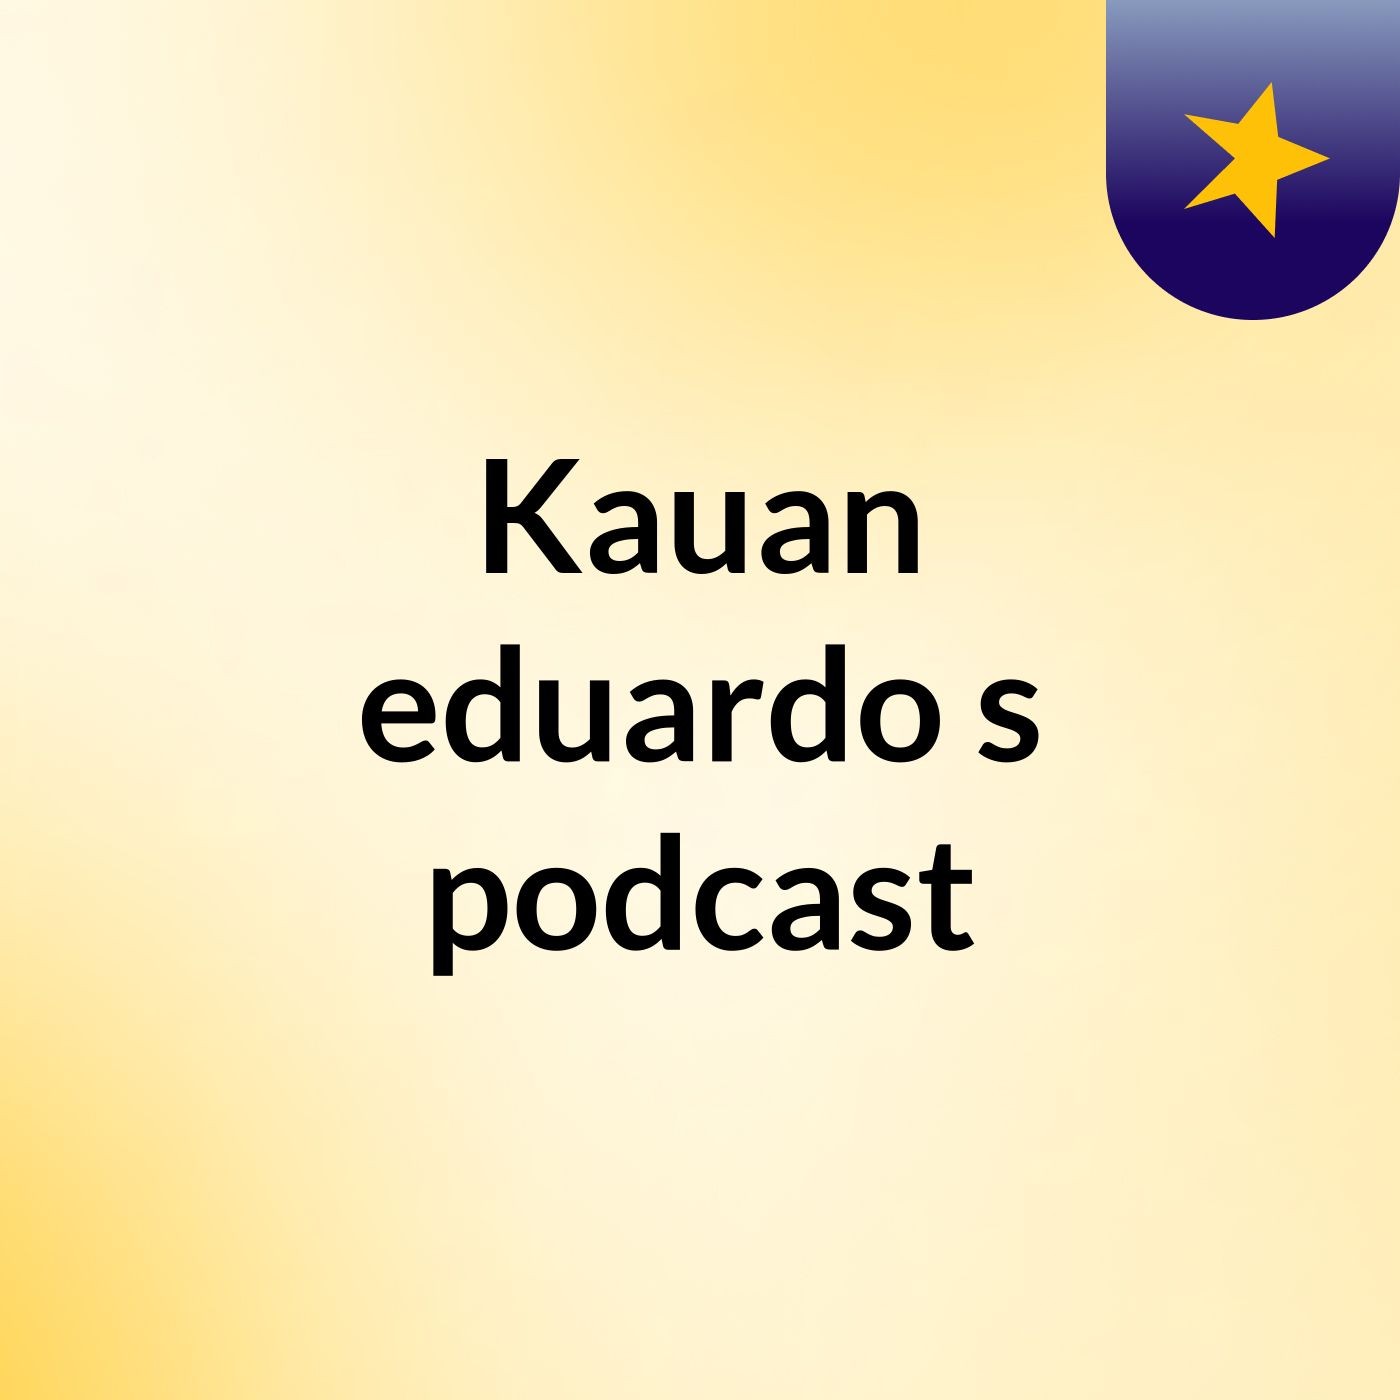 Episódio 5 - Kauan eduardo's podcast abertura